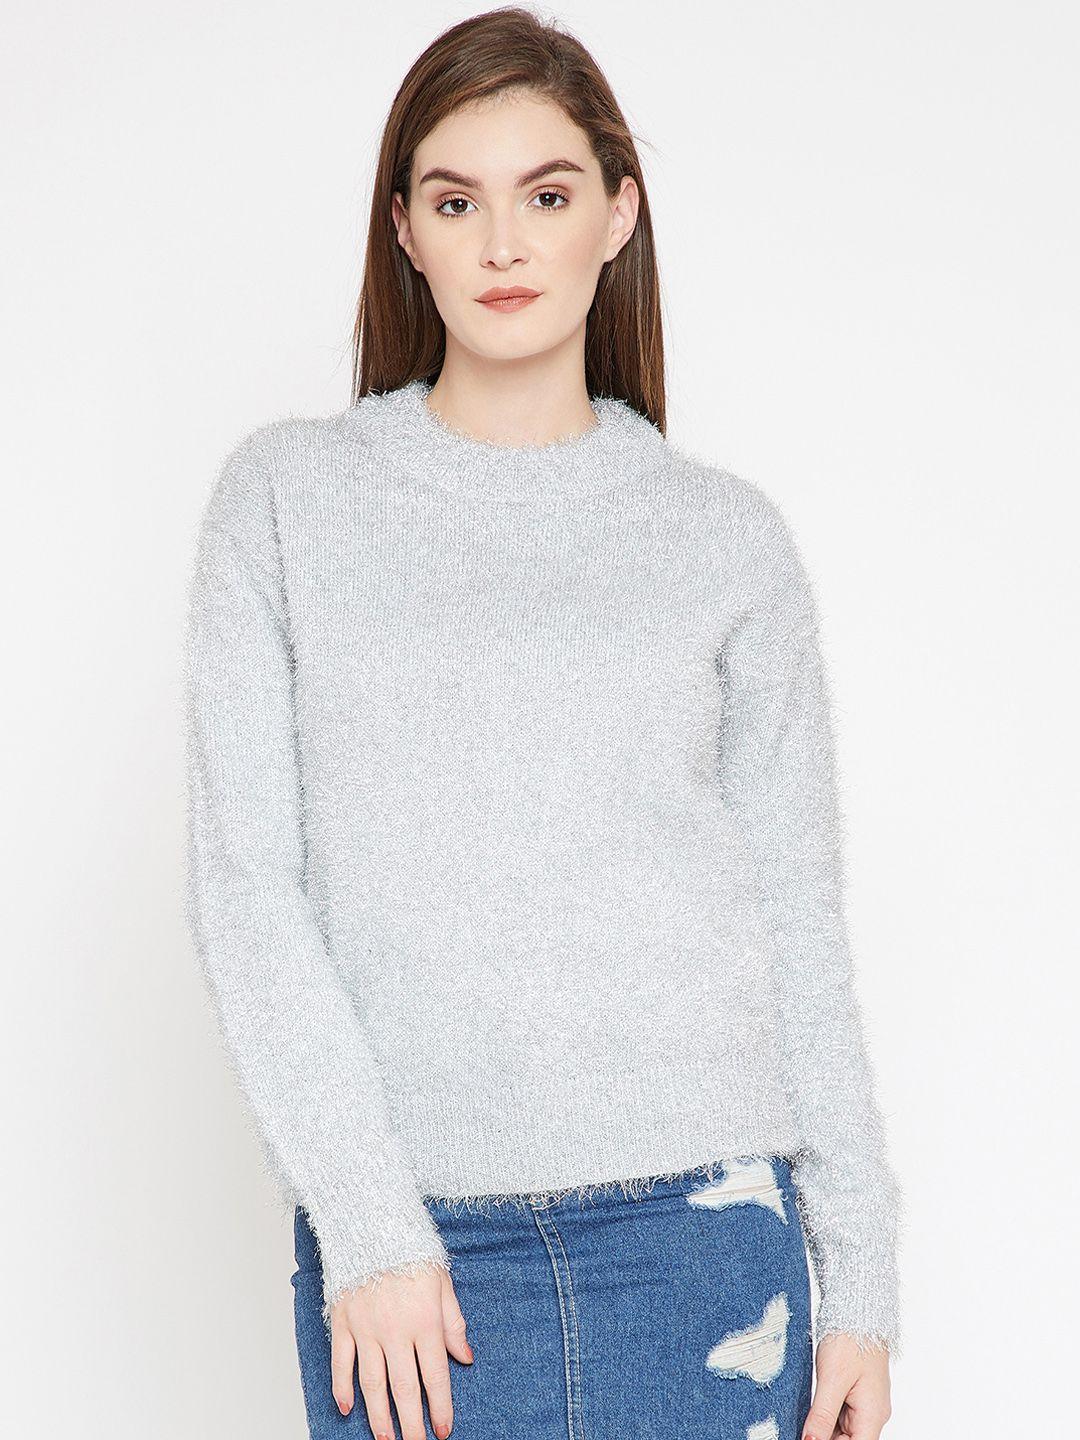 marie claire women grey self design pullover